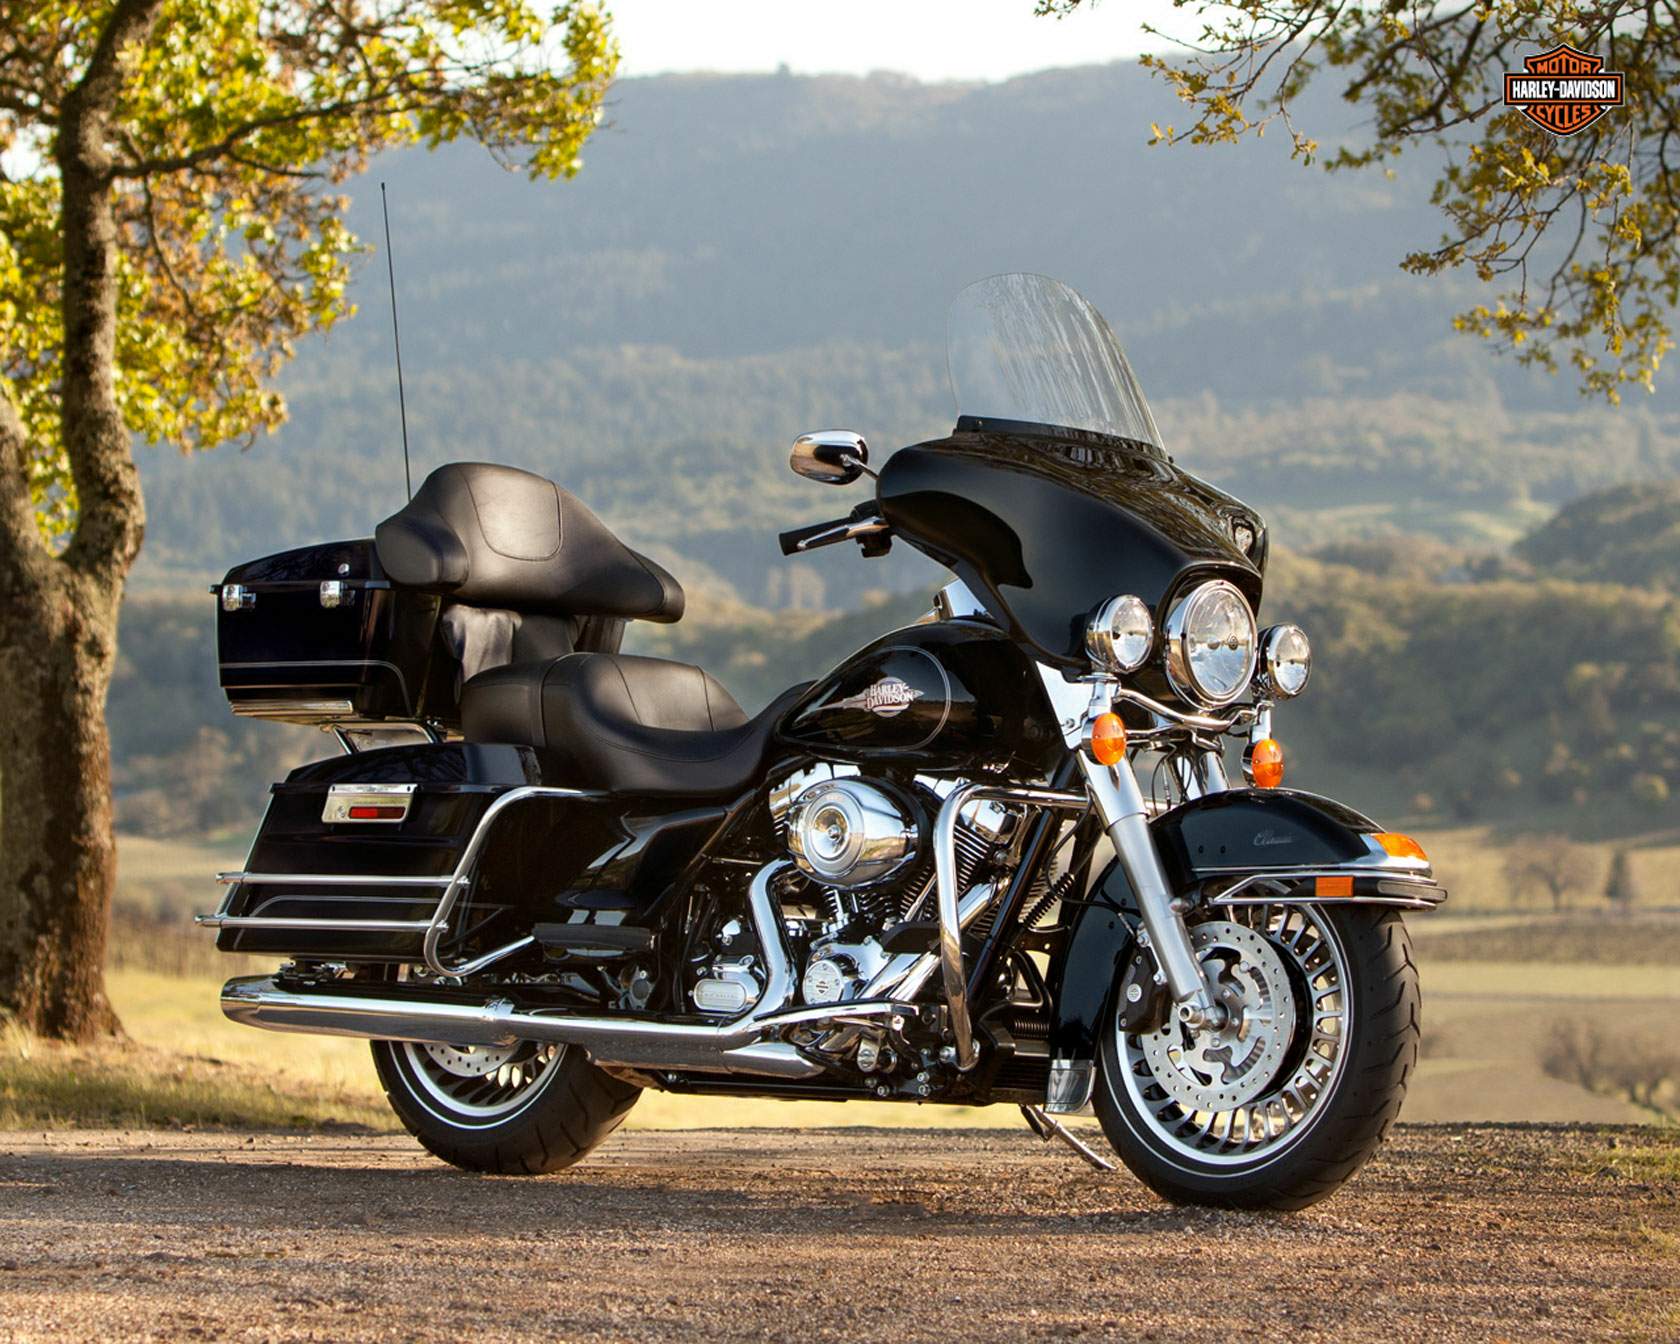 https://www.motorcyclespecs.co.za/Gallery%20B/Harley%20FLHTC%2013.jpg